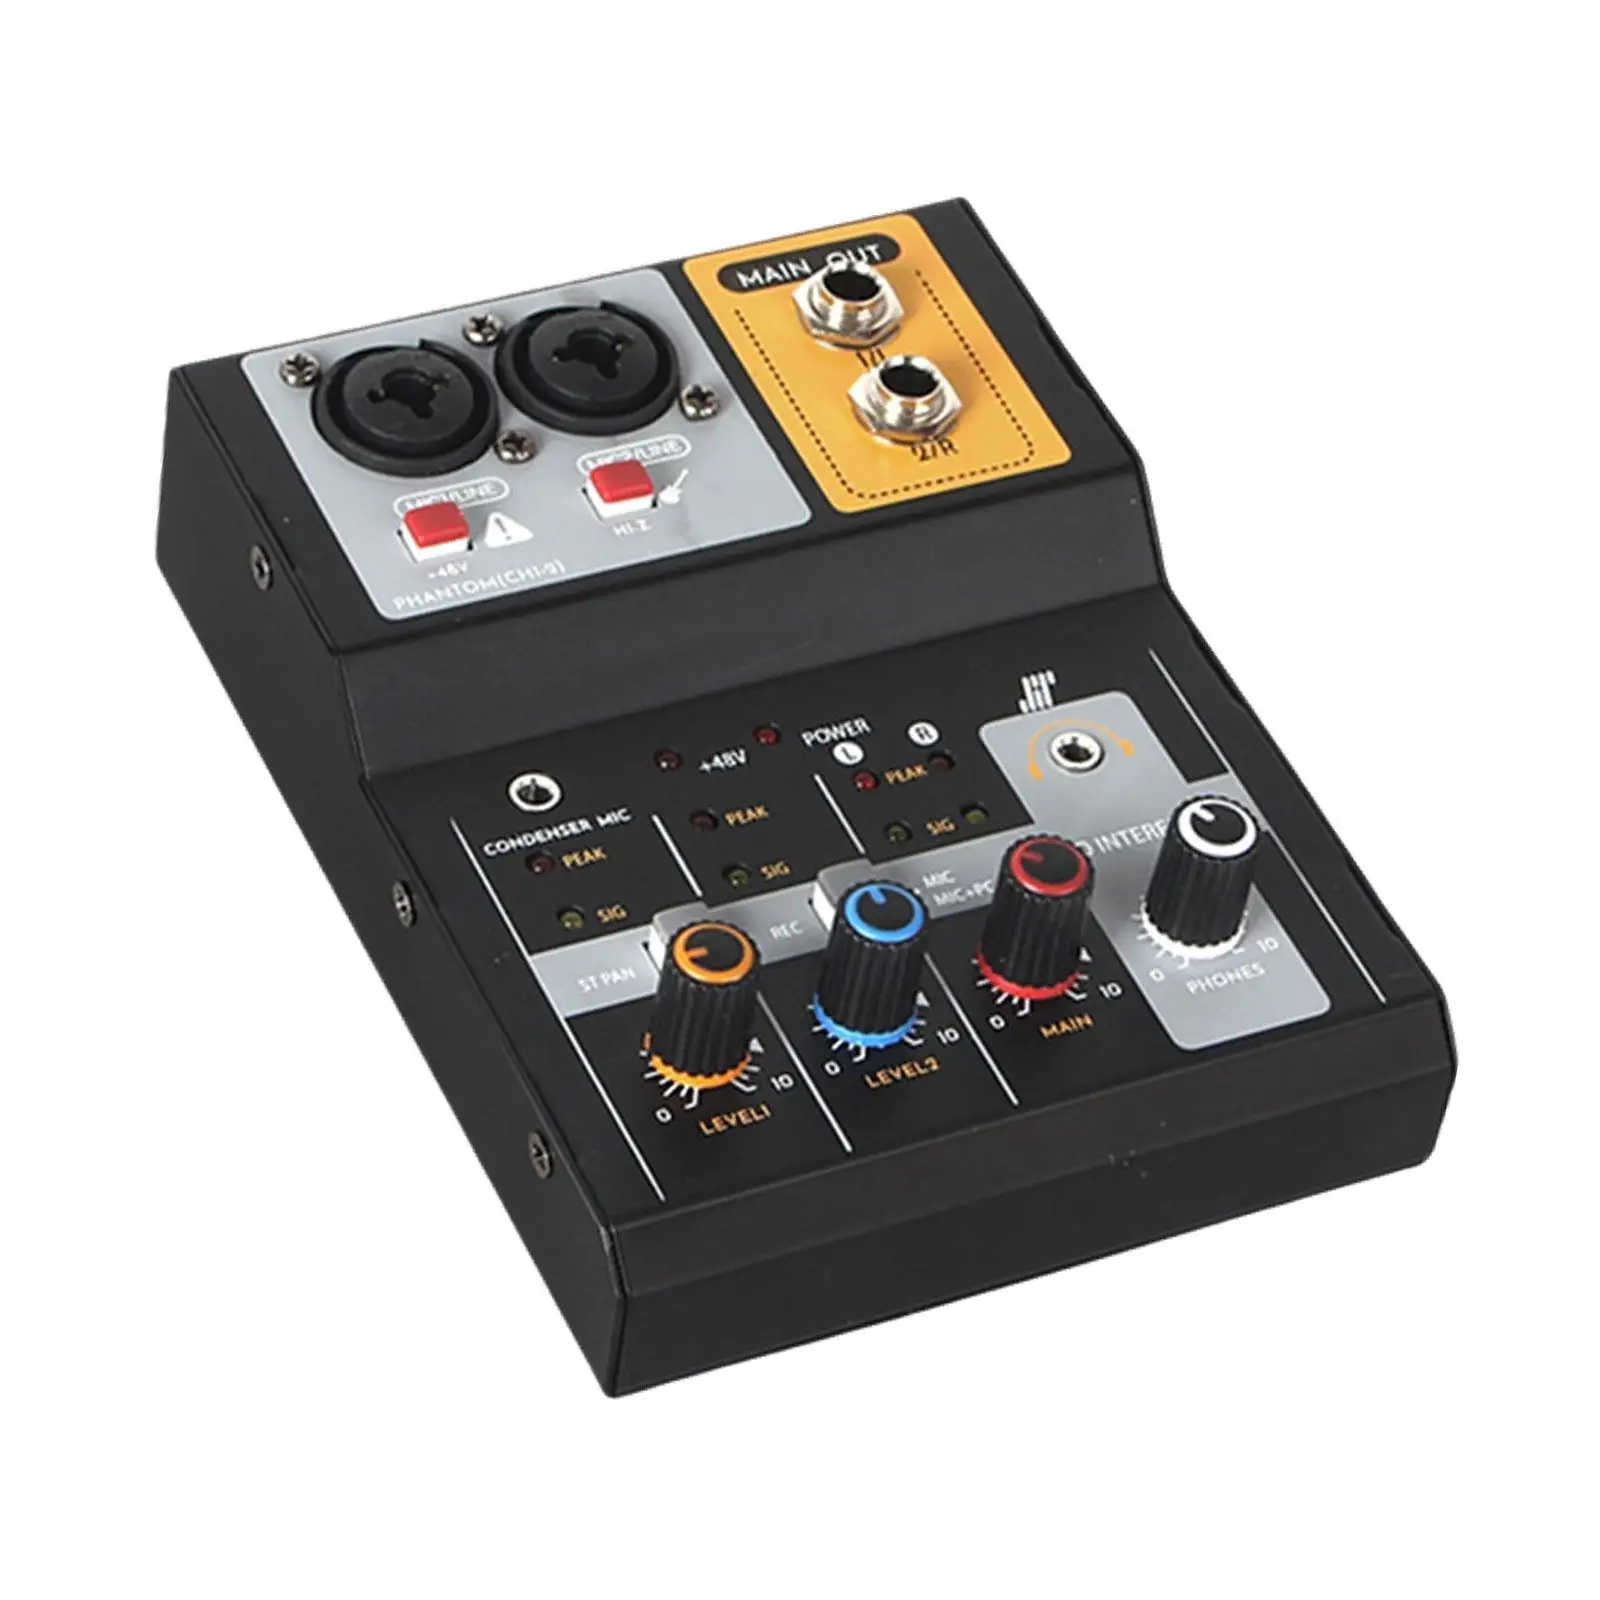 Mini Sound Board Console with 16 Bit 48KHz Audio Resolution USB 48V Audio Mixer for Studio Show Recording Podcasting Live